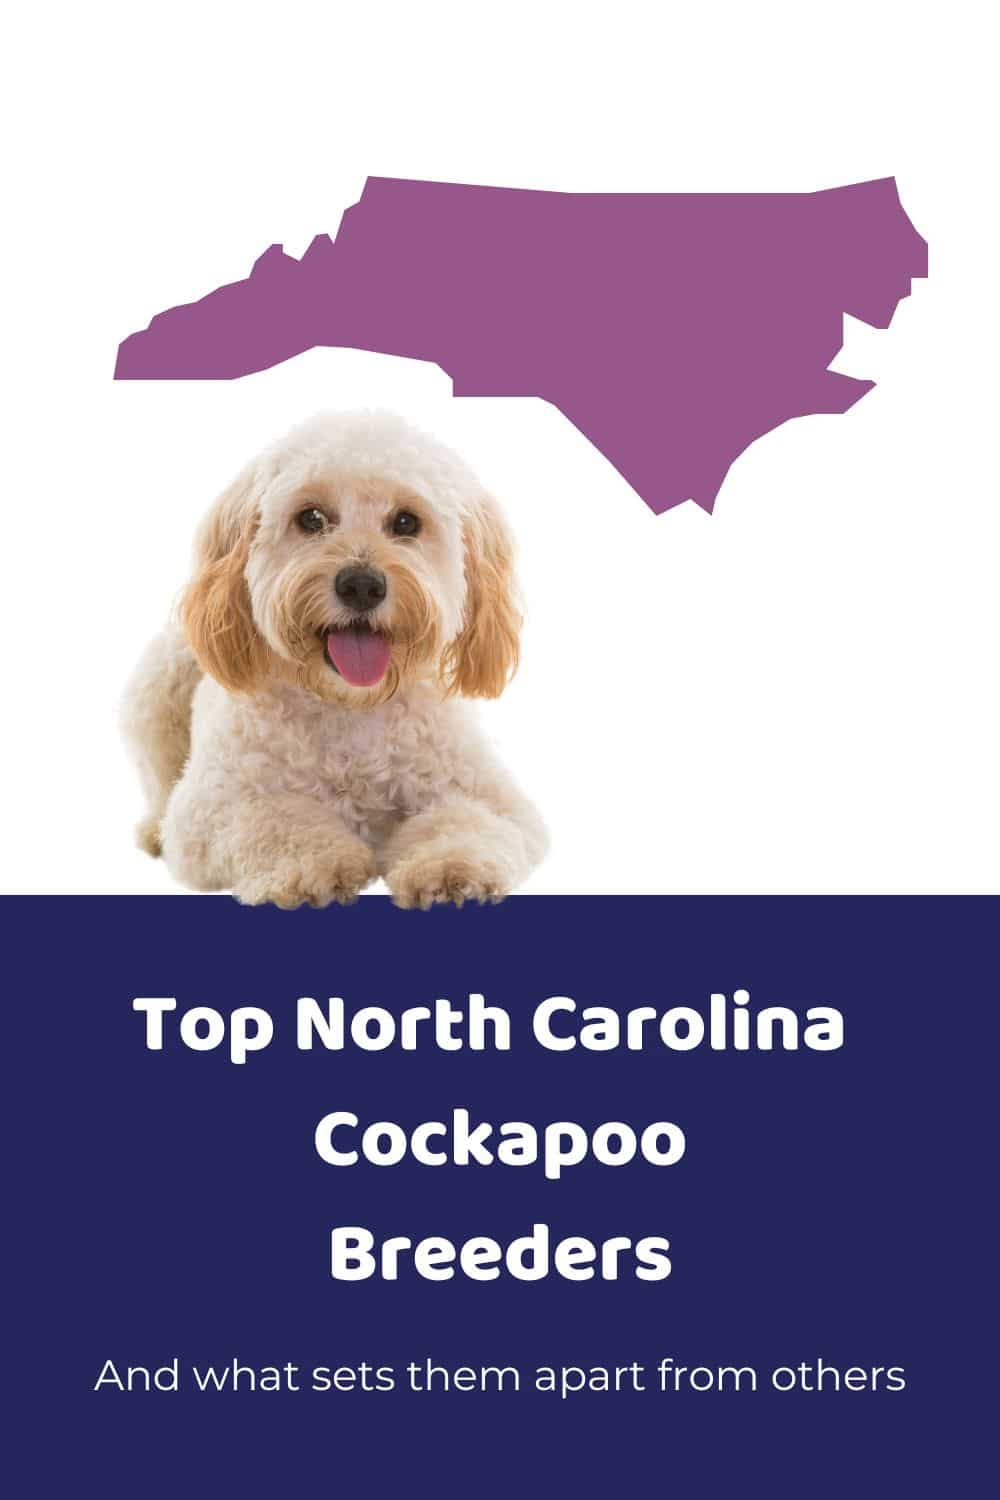 Top Ethical Cockapoo Breeders In NC (North Carolina)